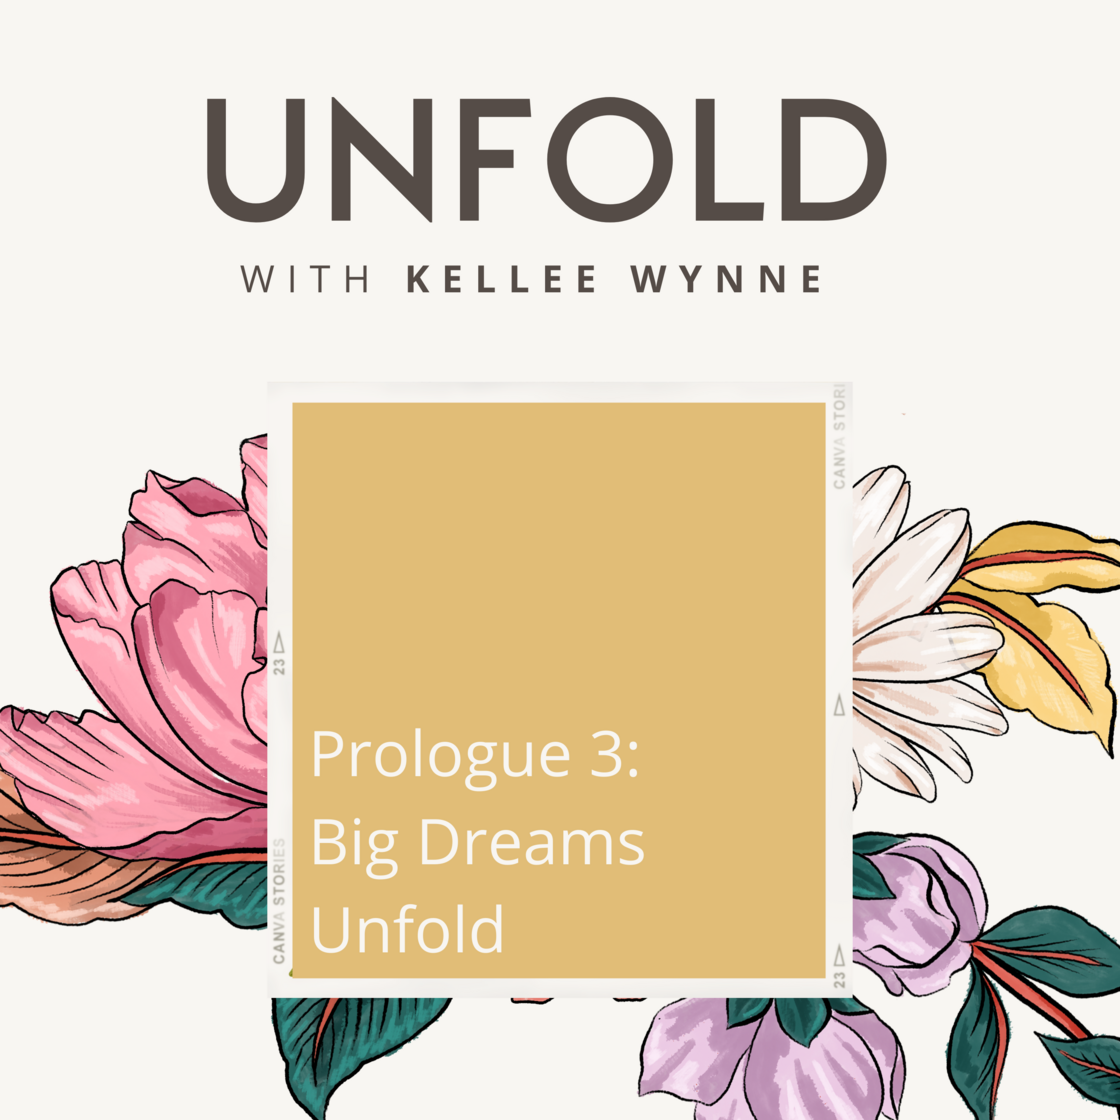 UNFOLD with Kellee Wynne prologue 3